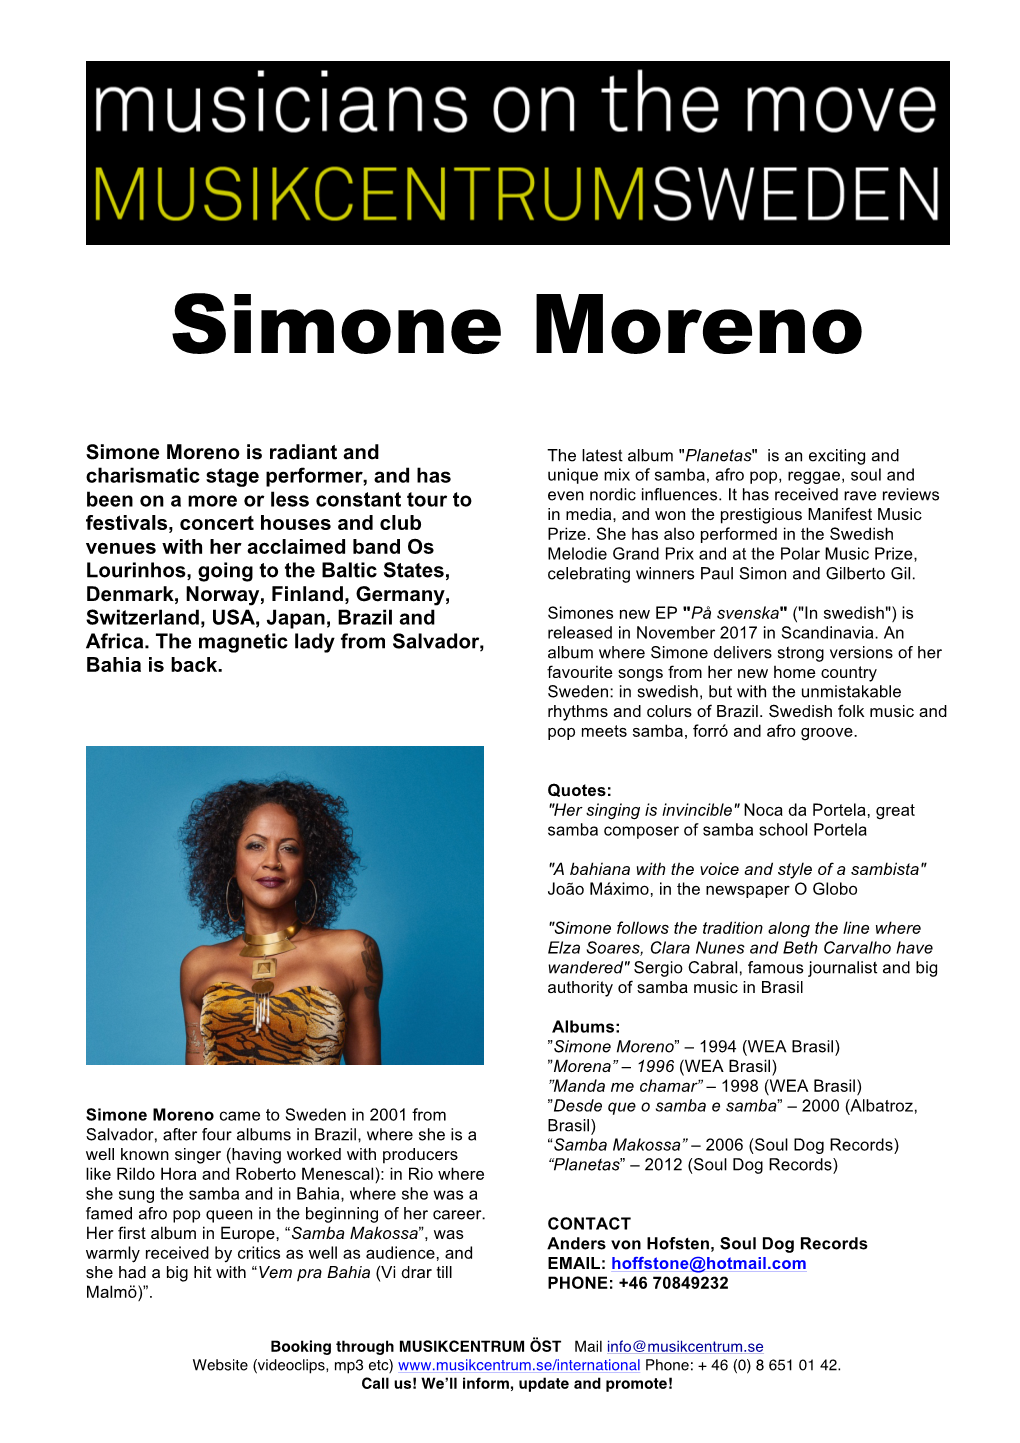 Simone Moreno on the Move 2017